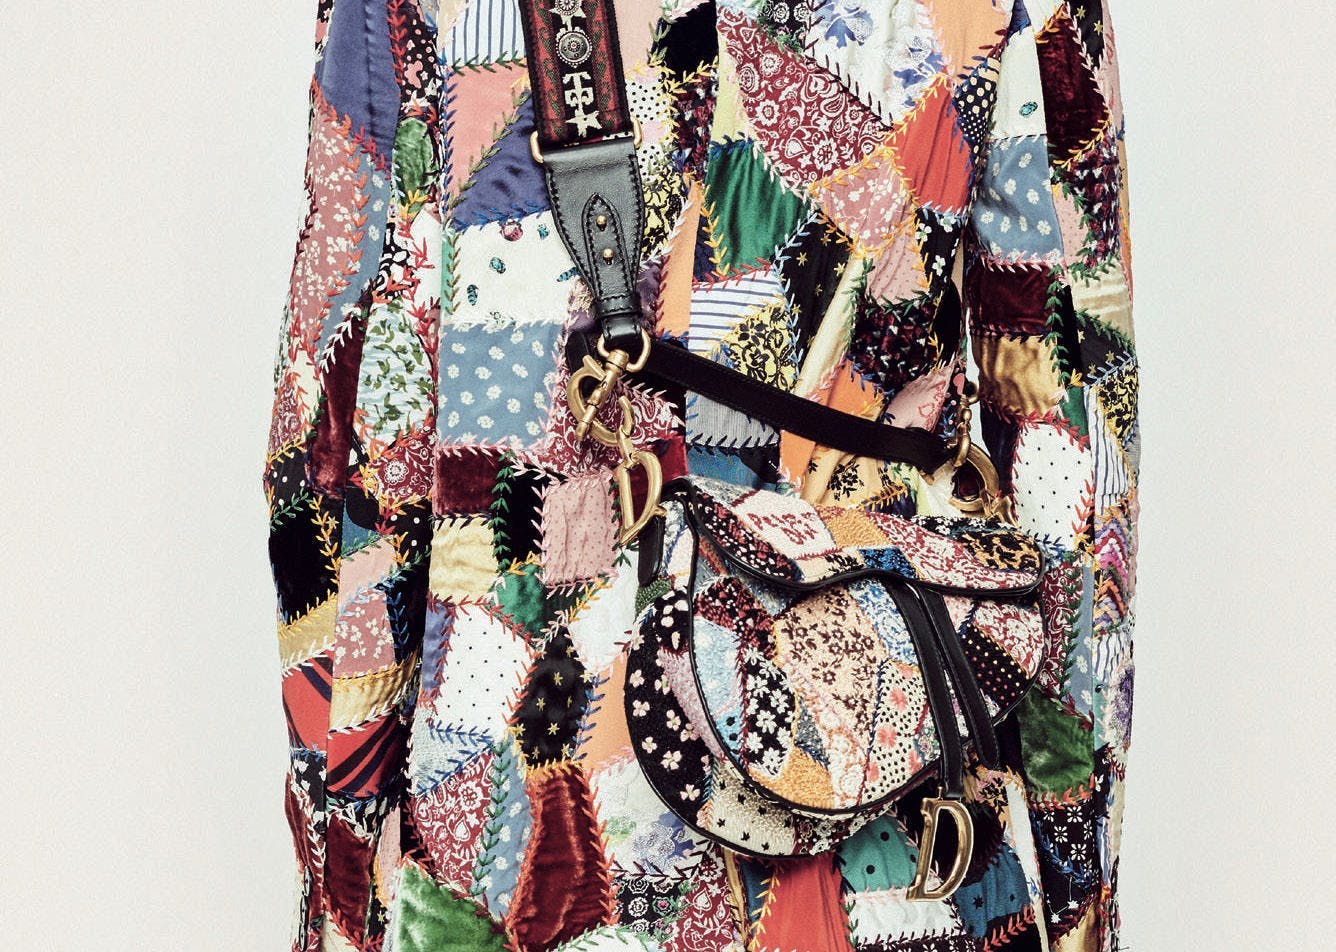 clothing apparel handbag bag accessories accessory robe fashion gown kimono